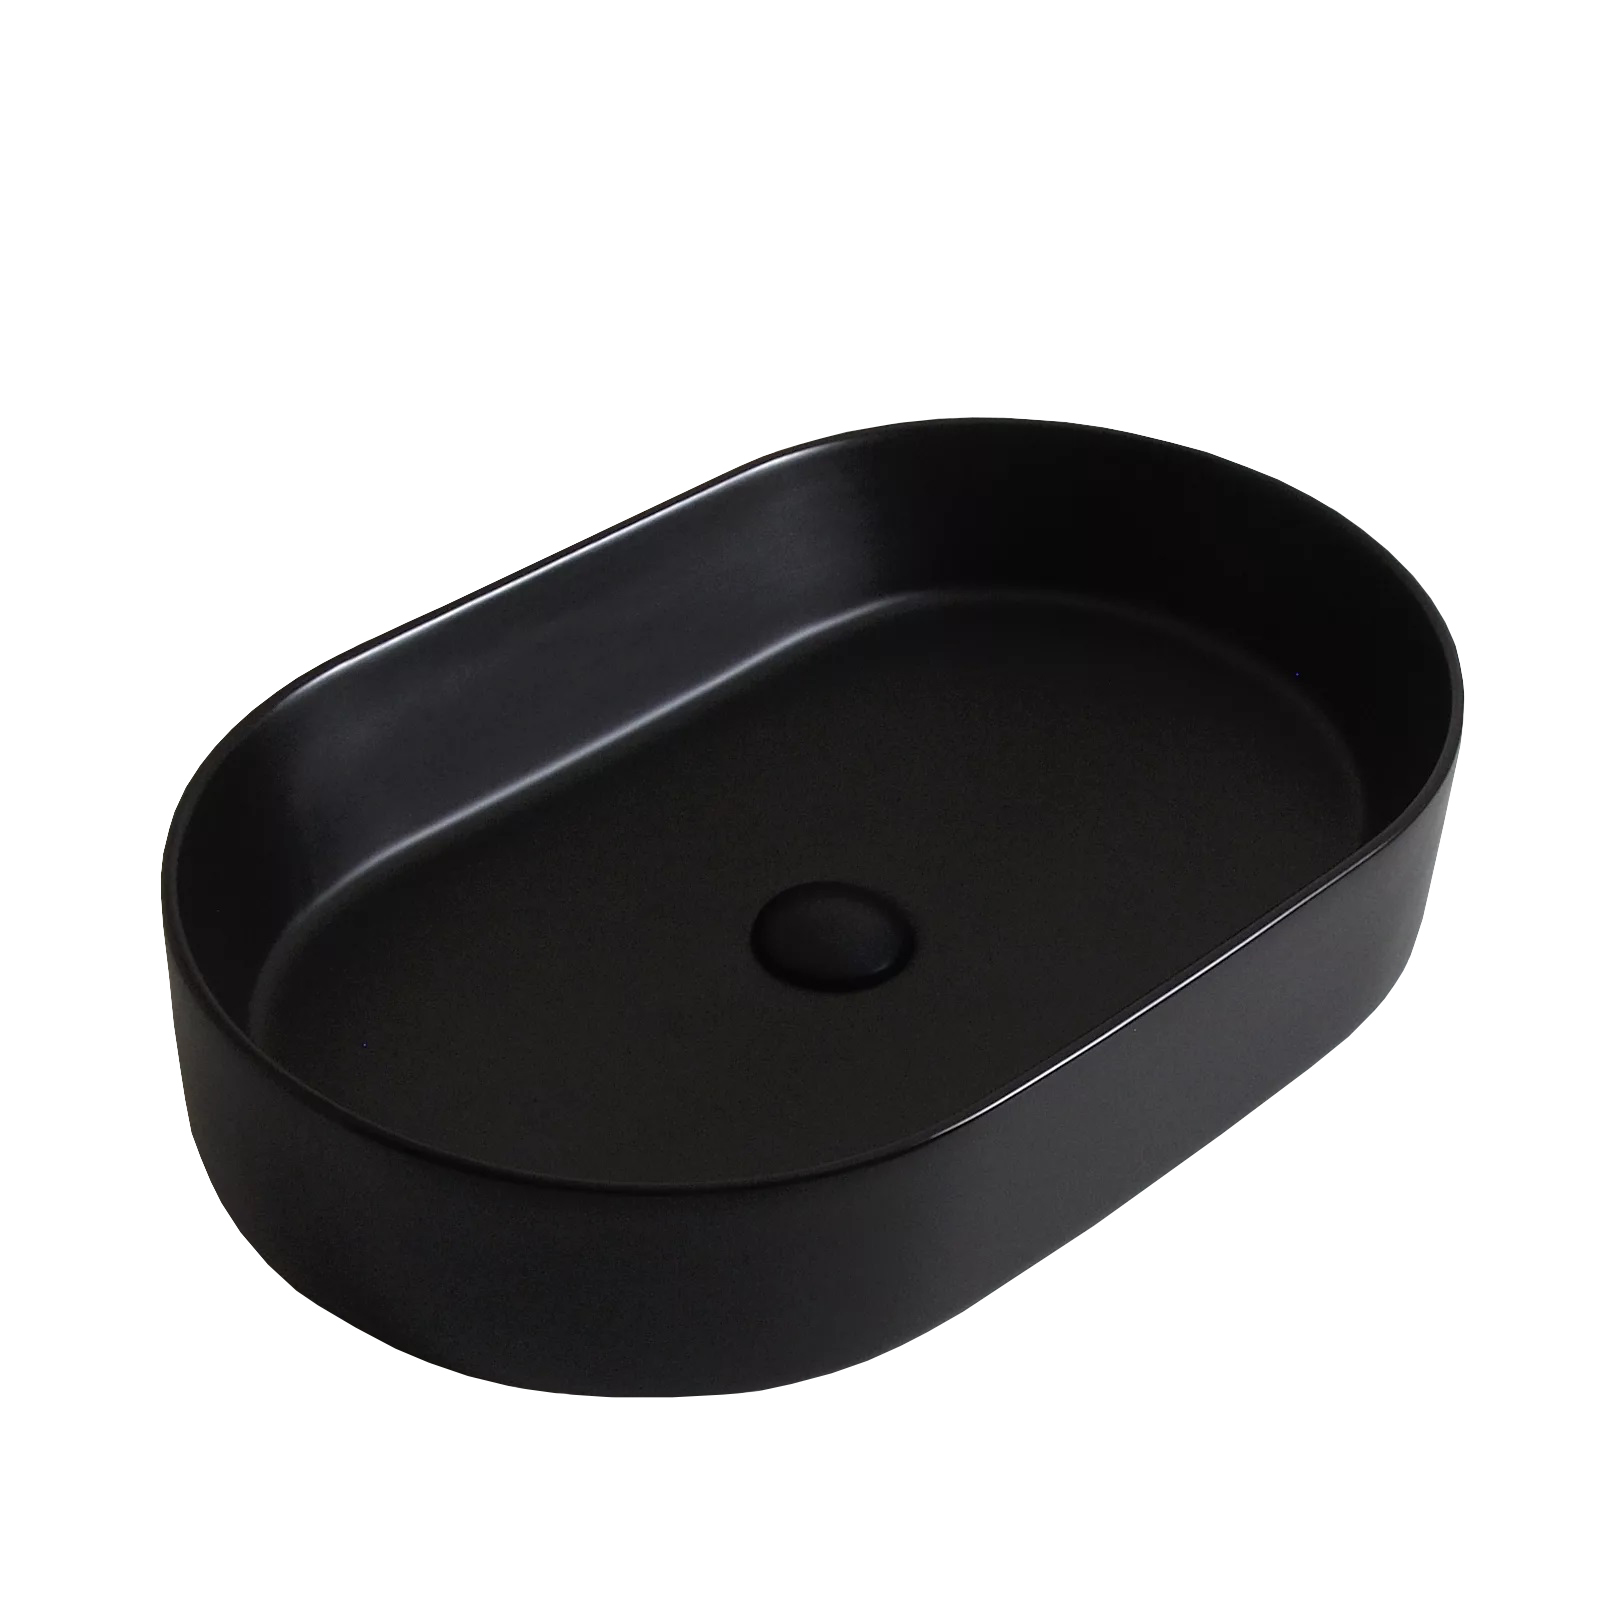 накладная черная раковина для ванной gid n9302bg овальная керамческая Накладная черная матовая раковина для ванной Gid Bm1479